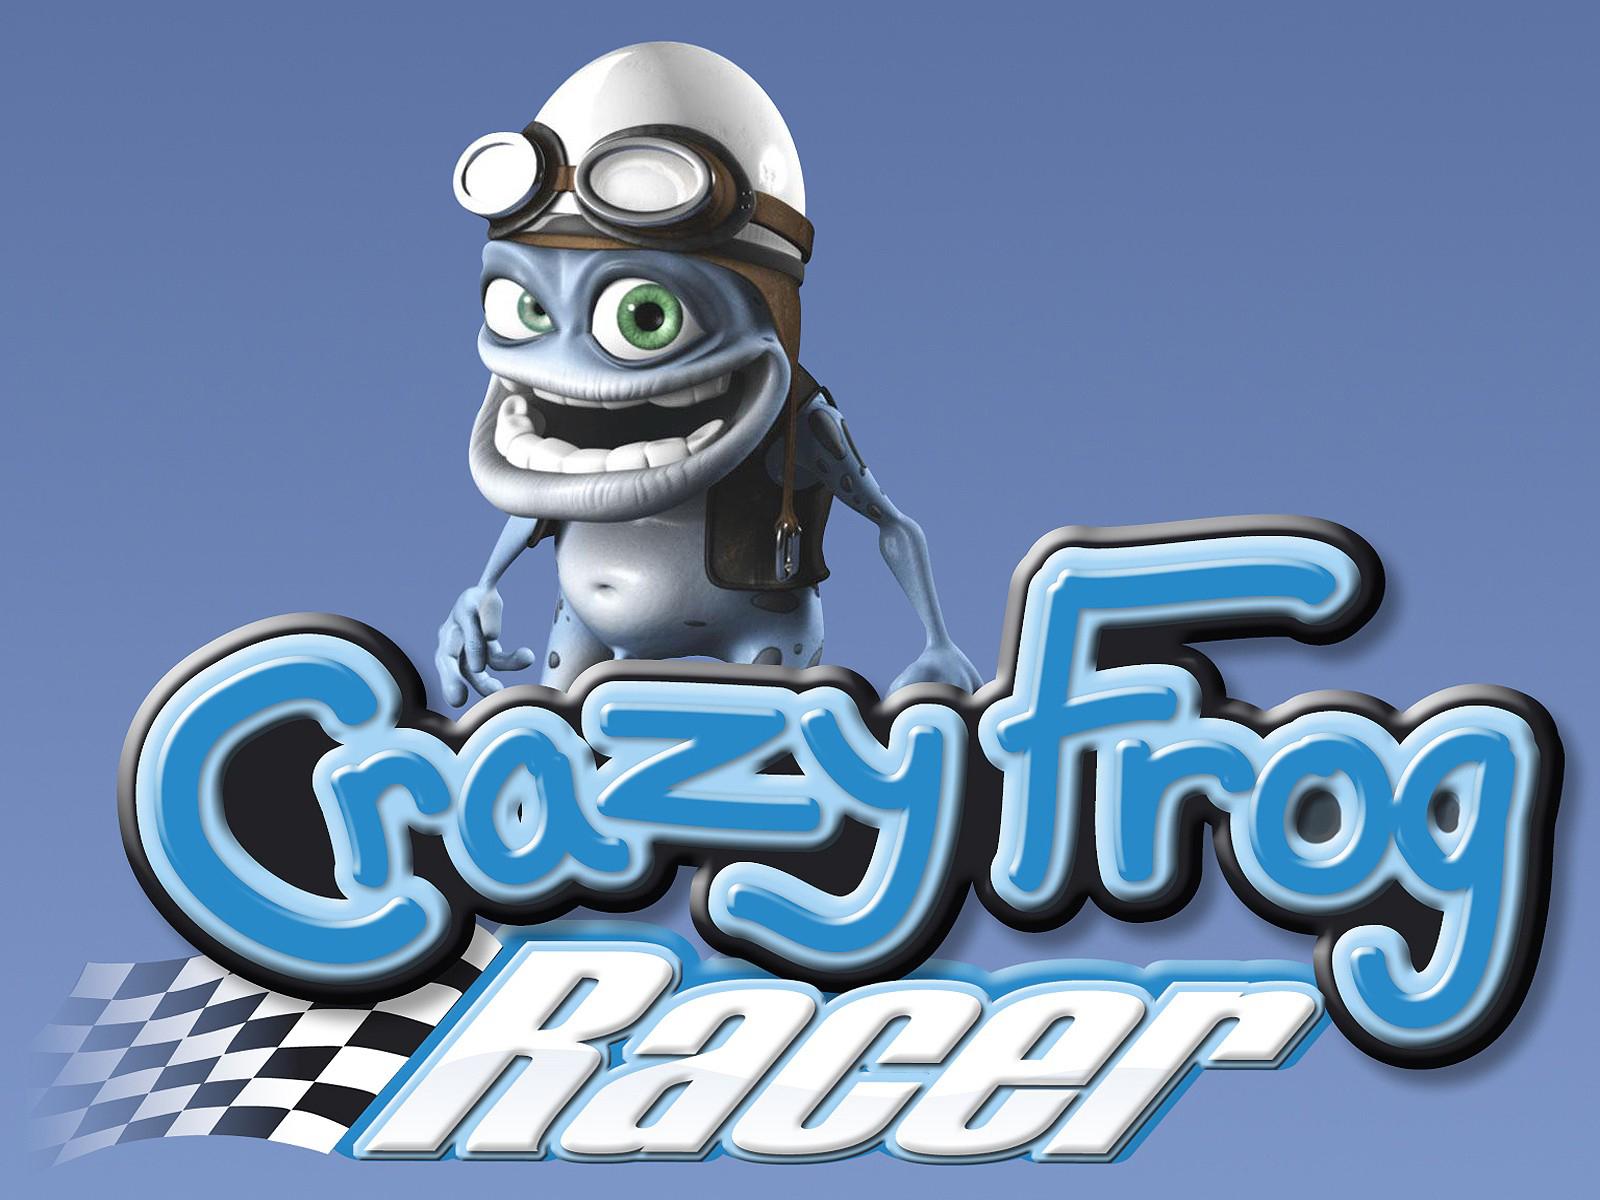 Desktop Wallpapers Crazy Frog Racer vdeo game